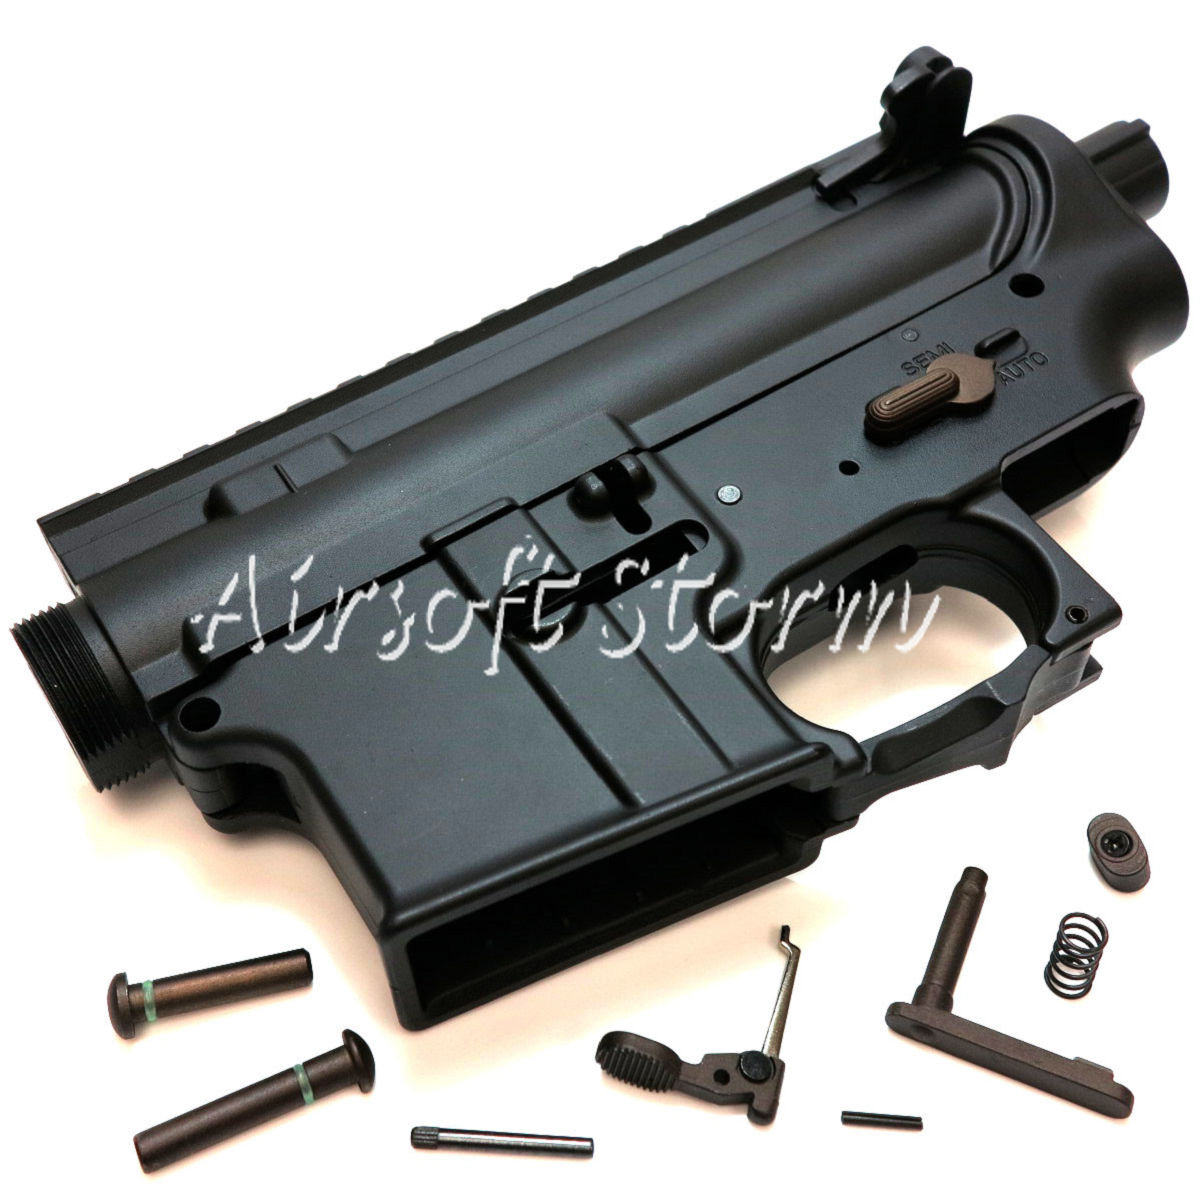 AEG Gear APS Upper & Lower Metal Body Receiver for M4/M16 AEG Black